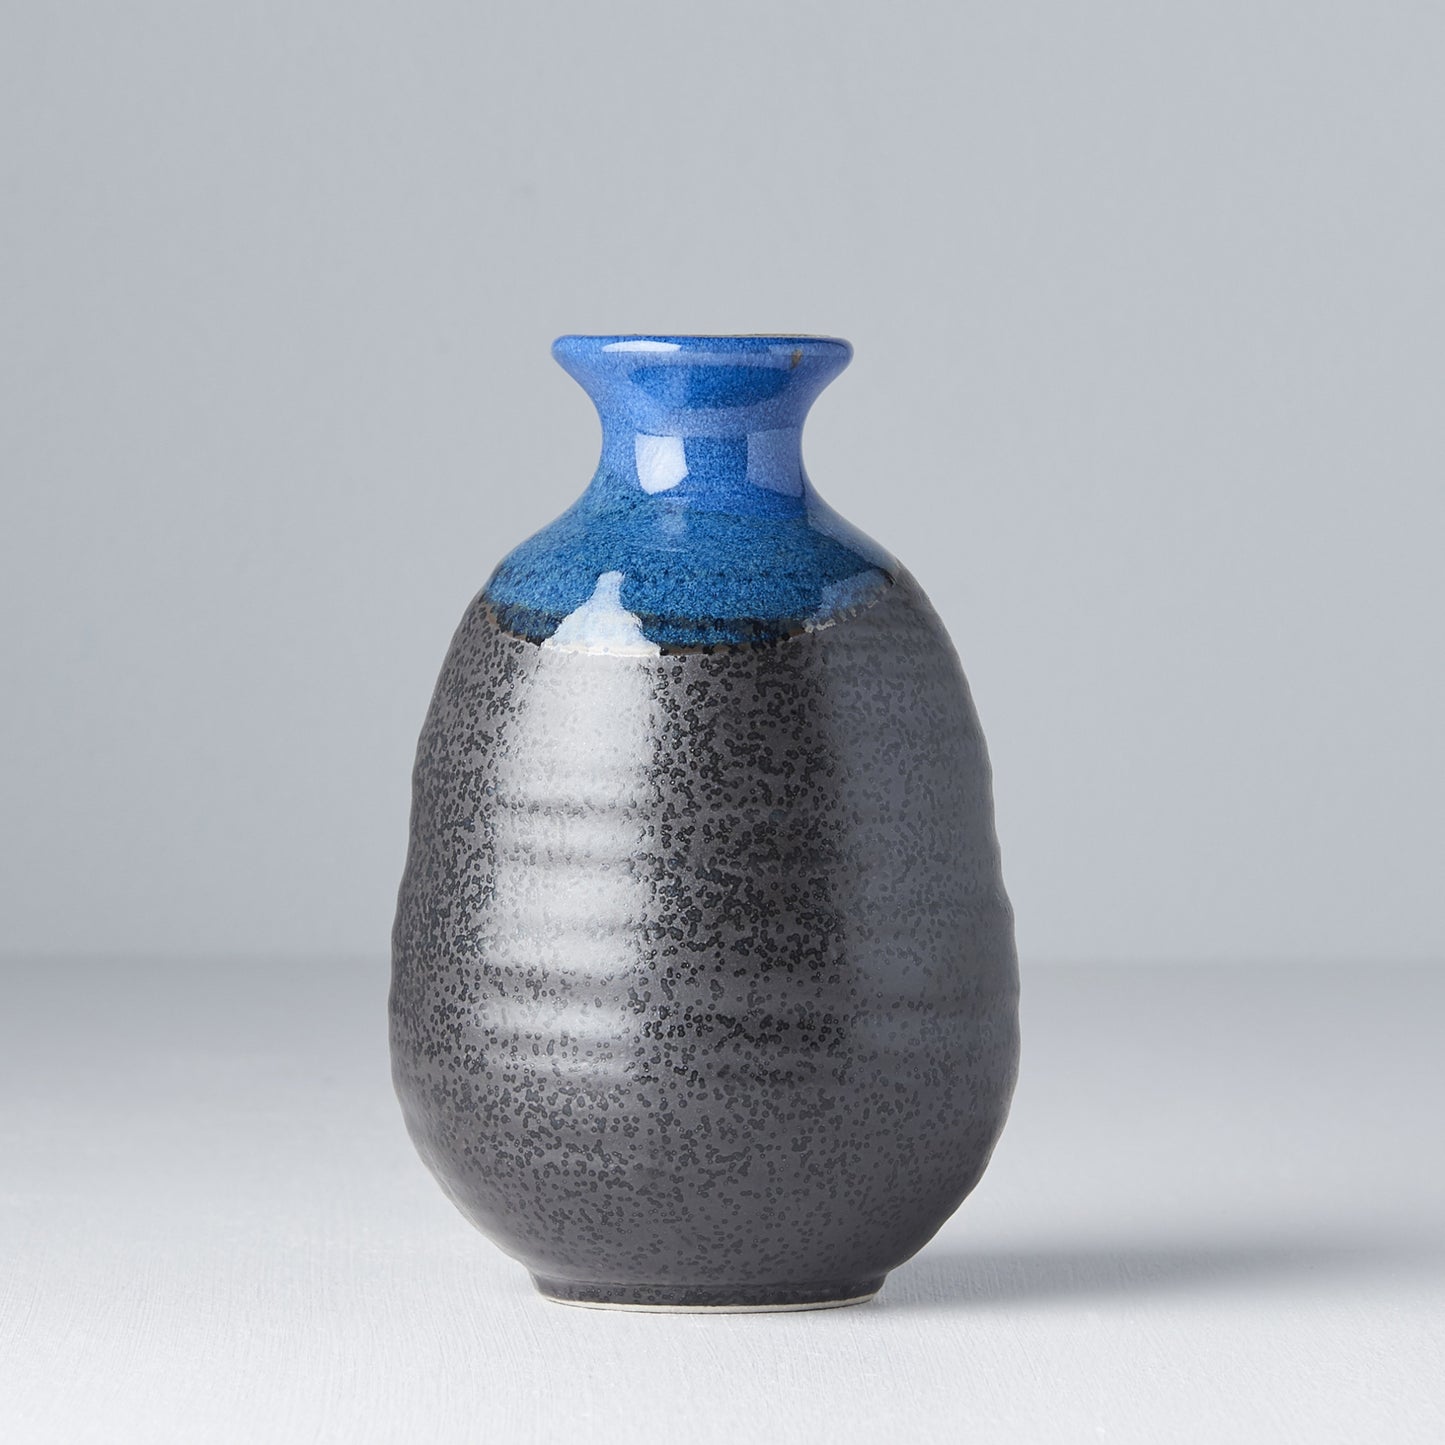 Sake jug black with bright blue top 12cm